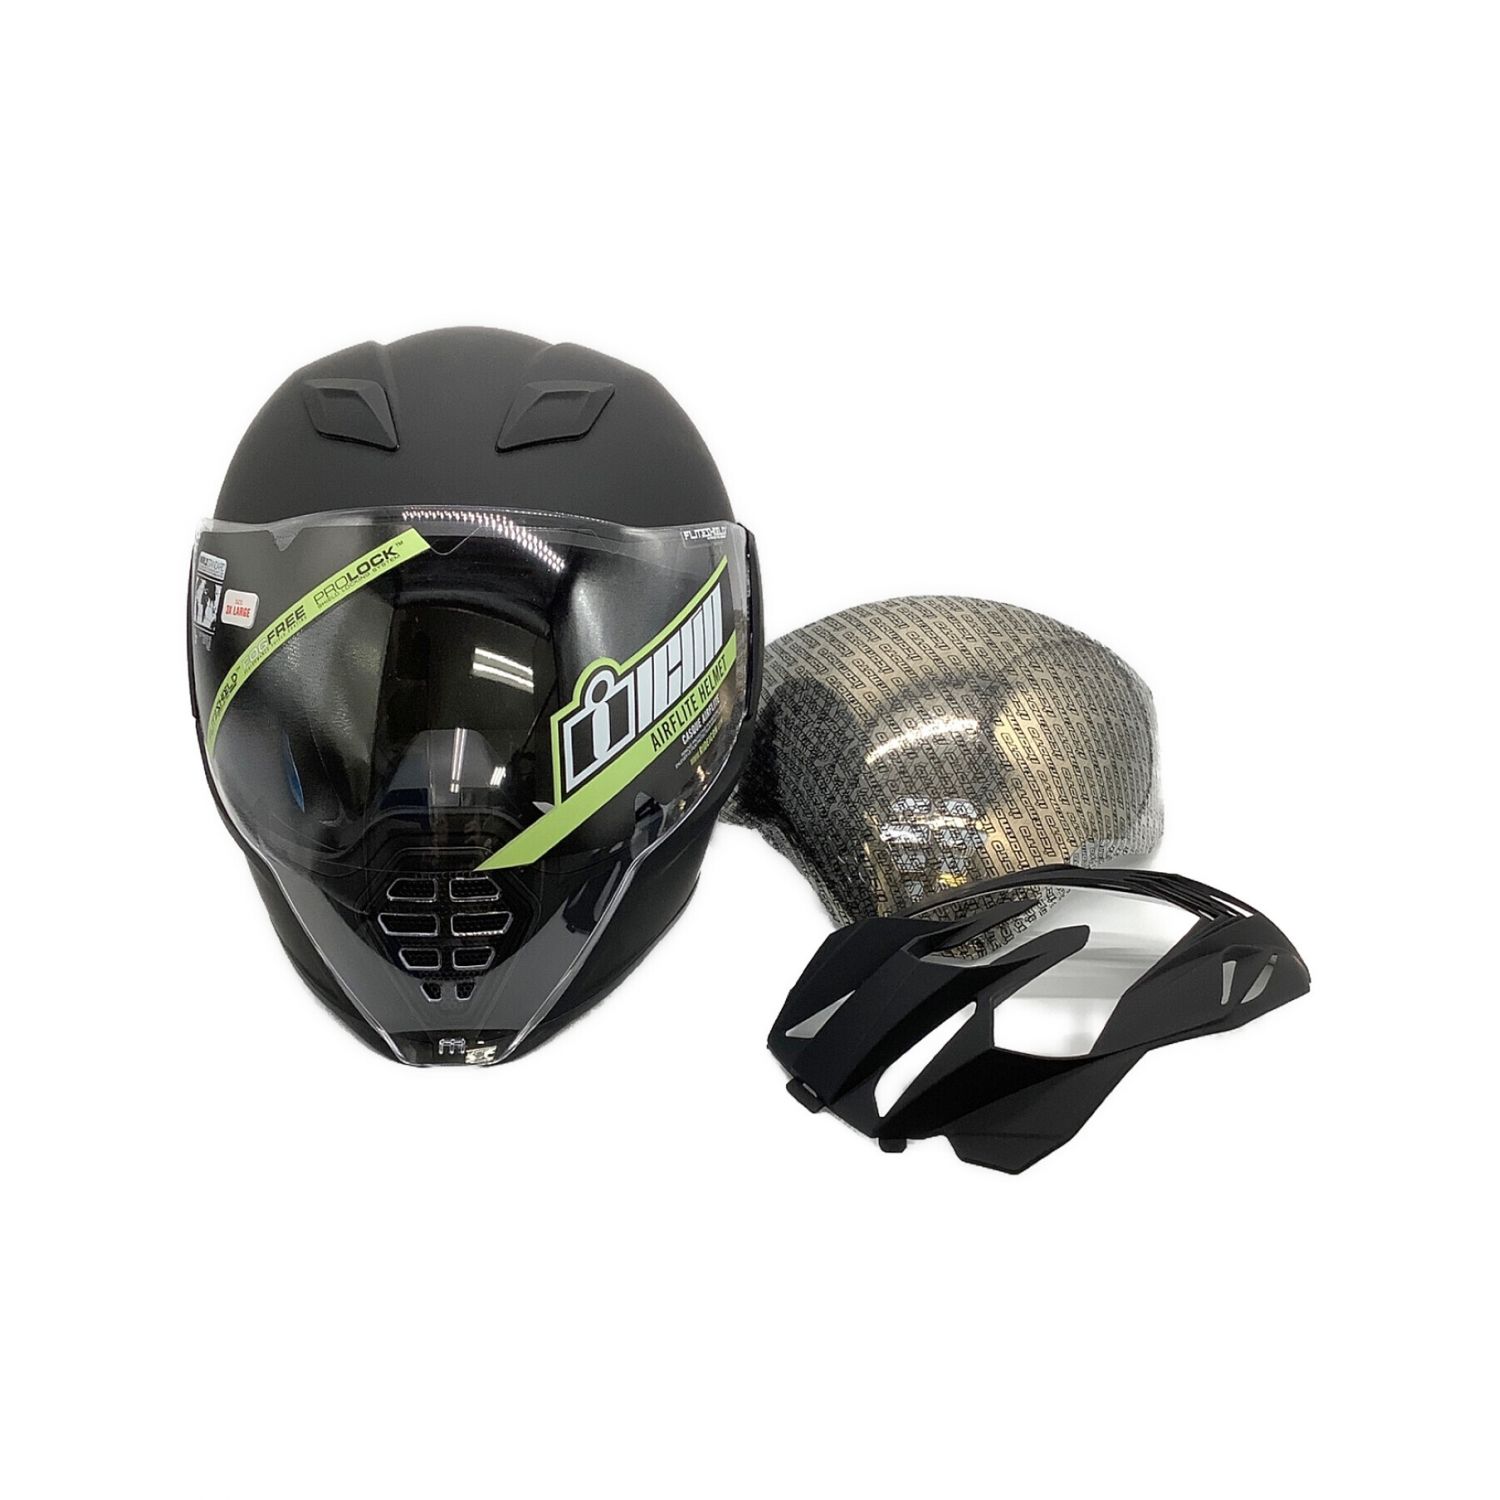 YBFH-001 MATBLACK ヘルメット gNdBm-m15031785361 | mubec.com.br